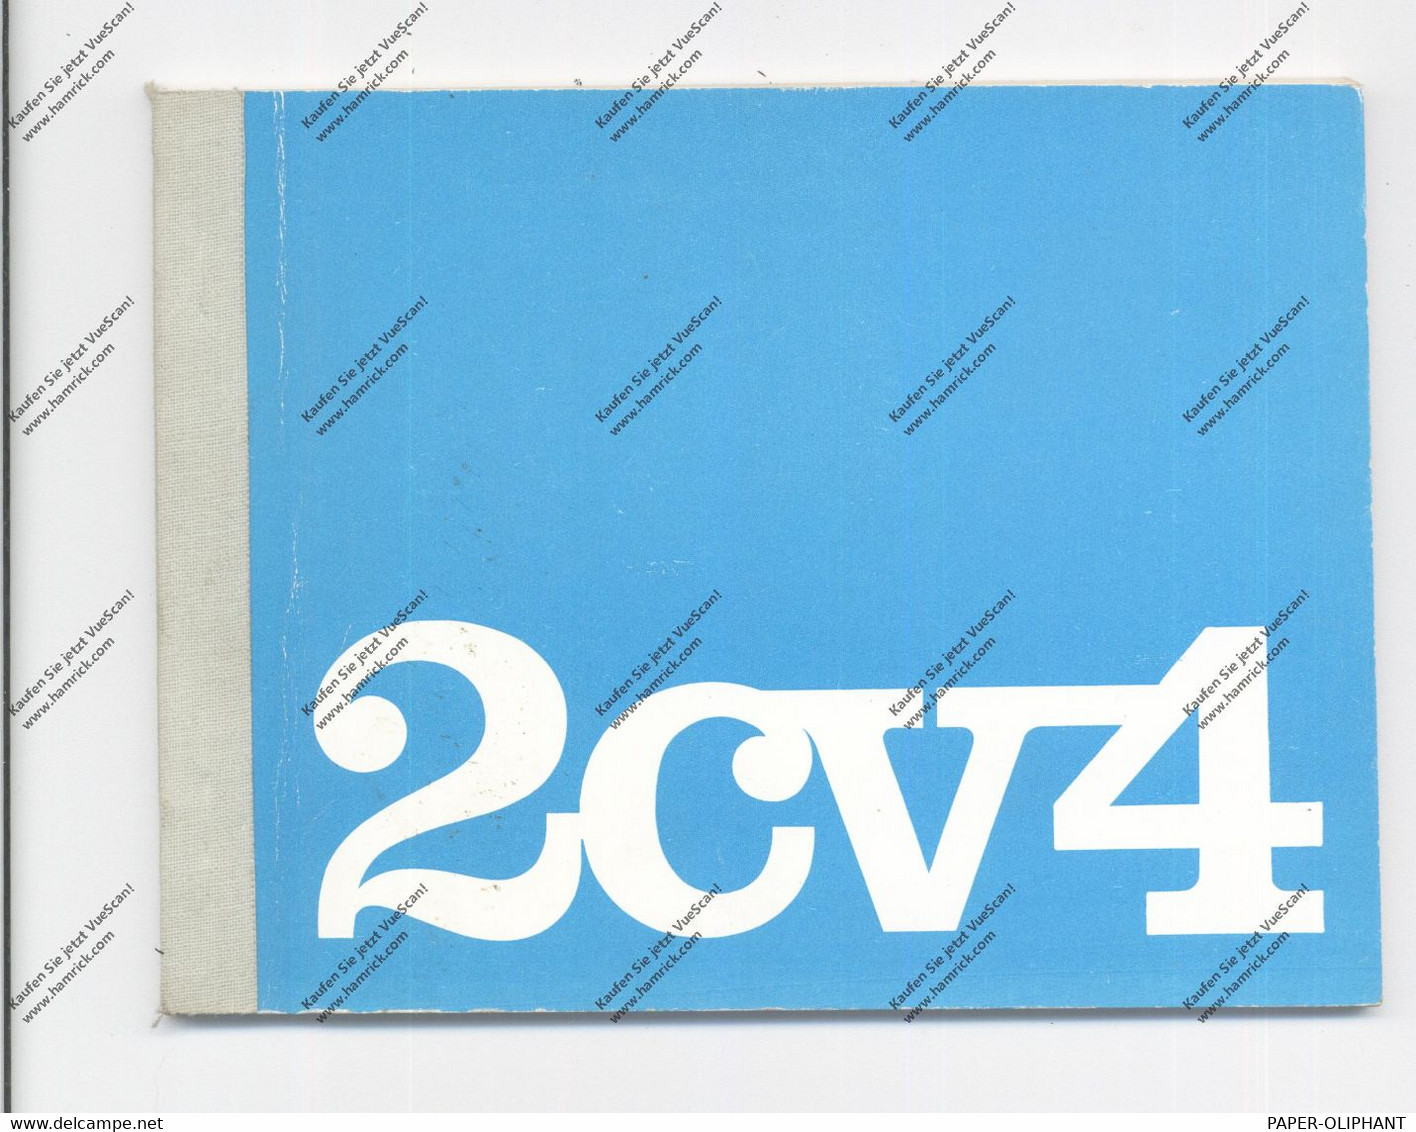 AUTOMOBIL - CITROEN 2CV4 Handbuch, 53 Seiten, Sehr Gute Erhaltung - Shop-Manuals